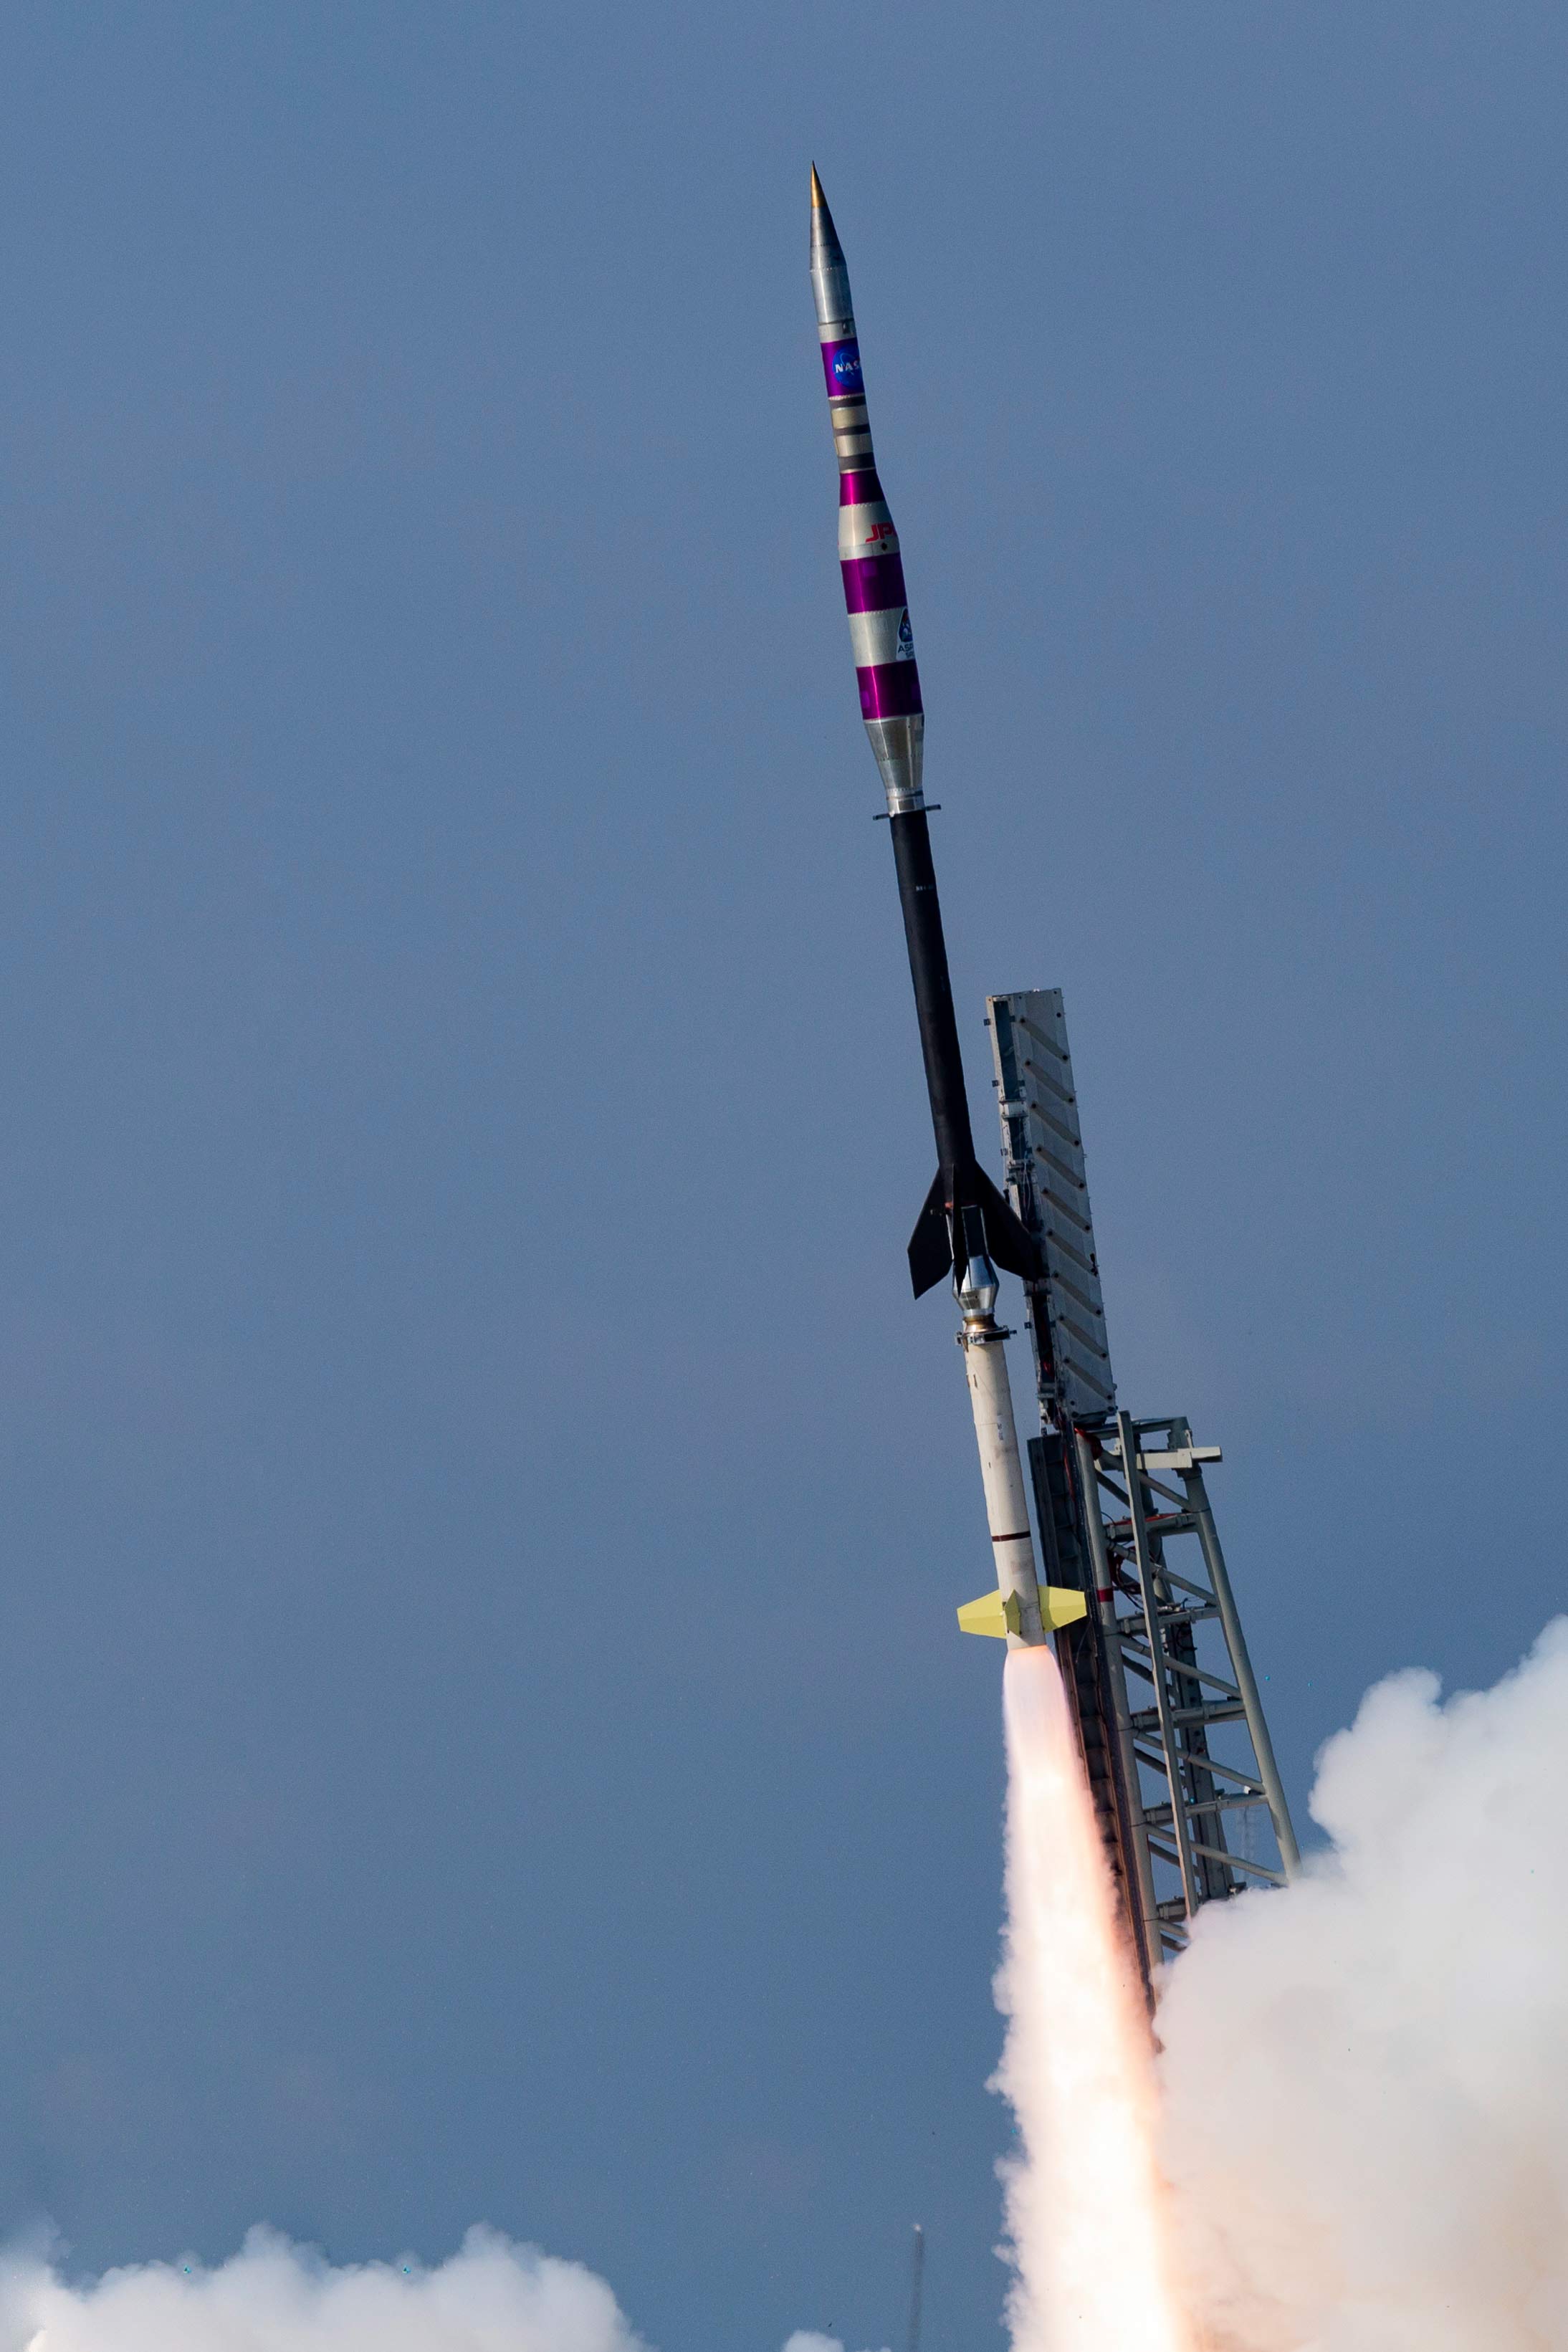 ASPIRE-3 sounding rocket lift-off from Wallops Island, VA.